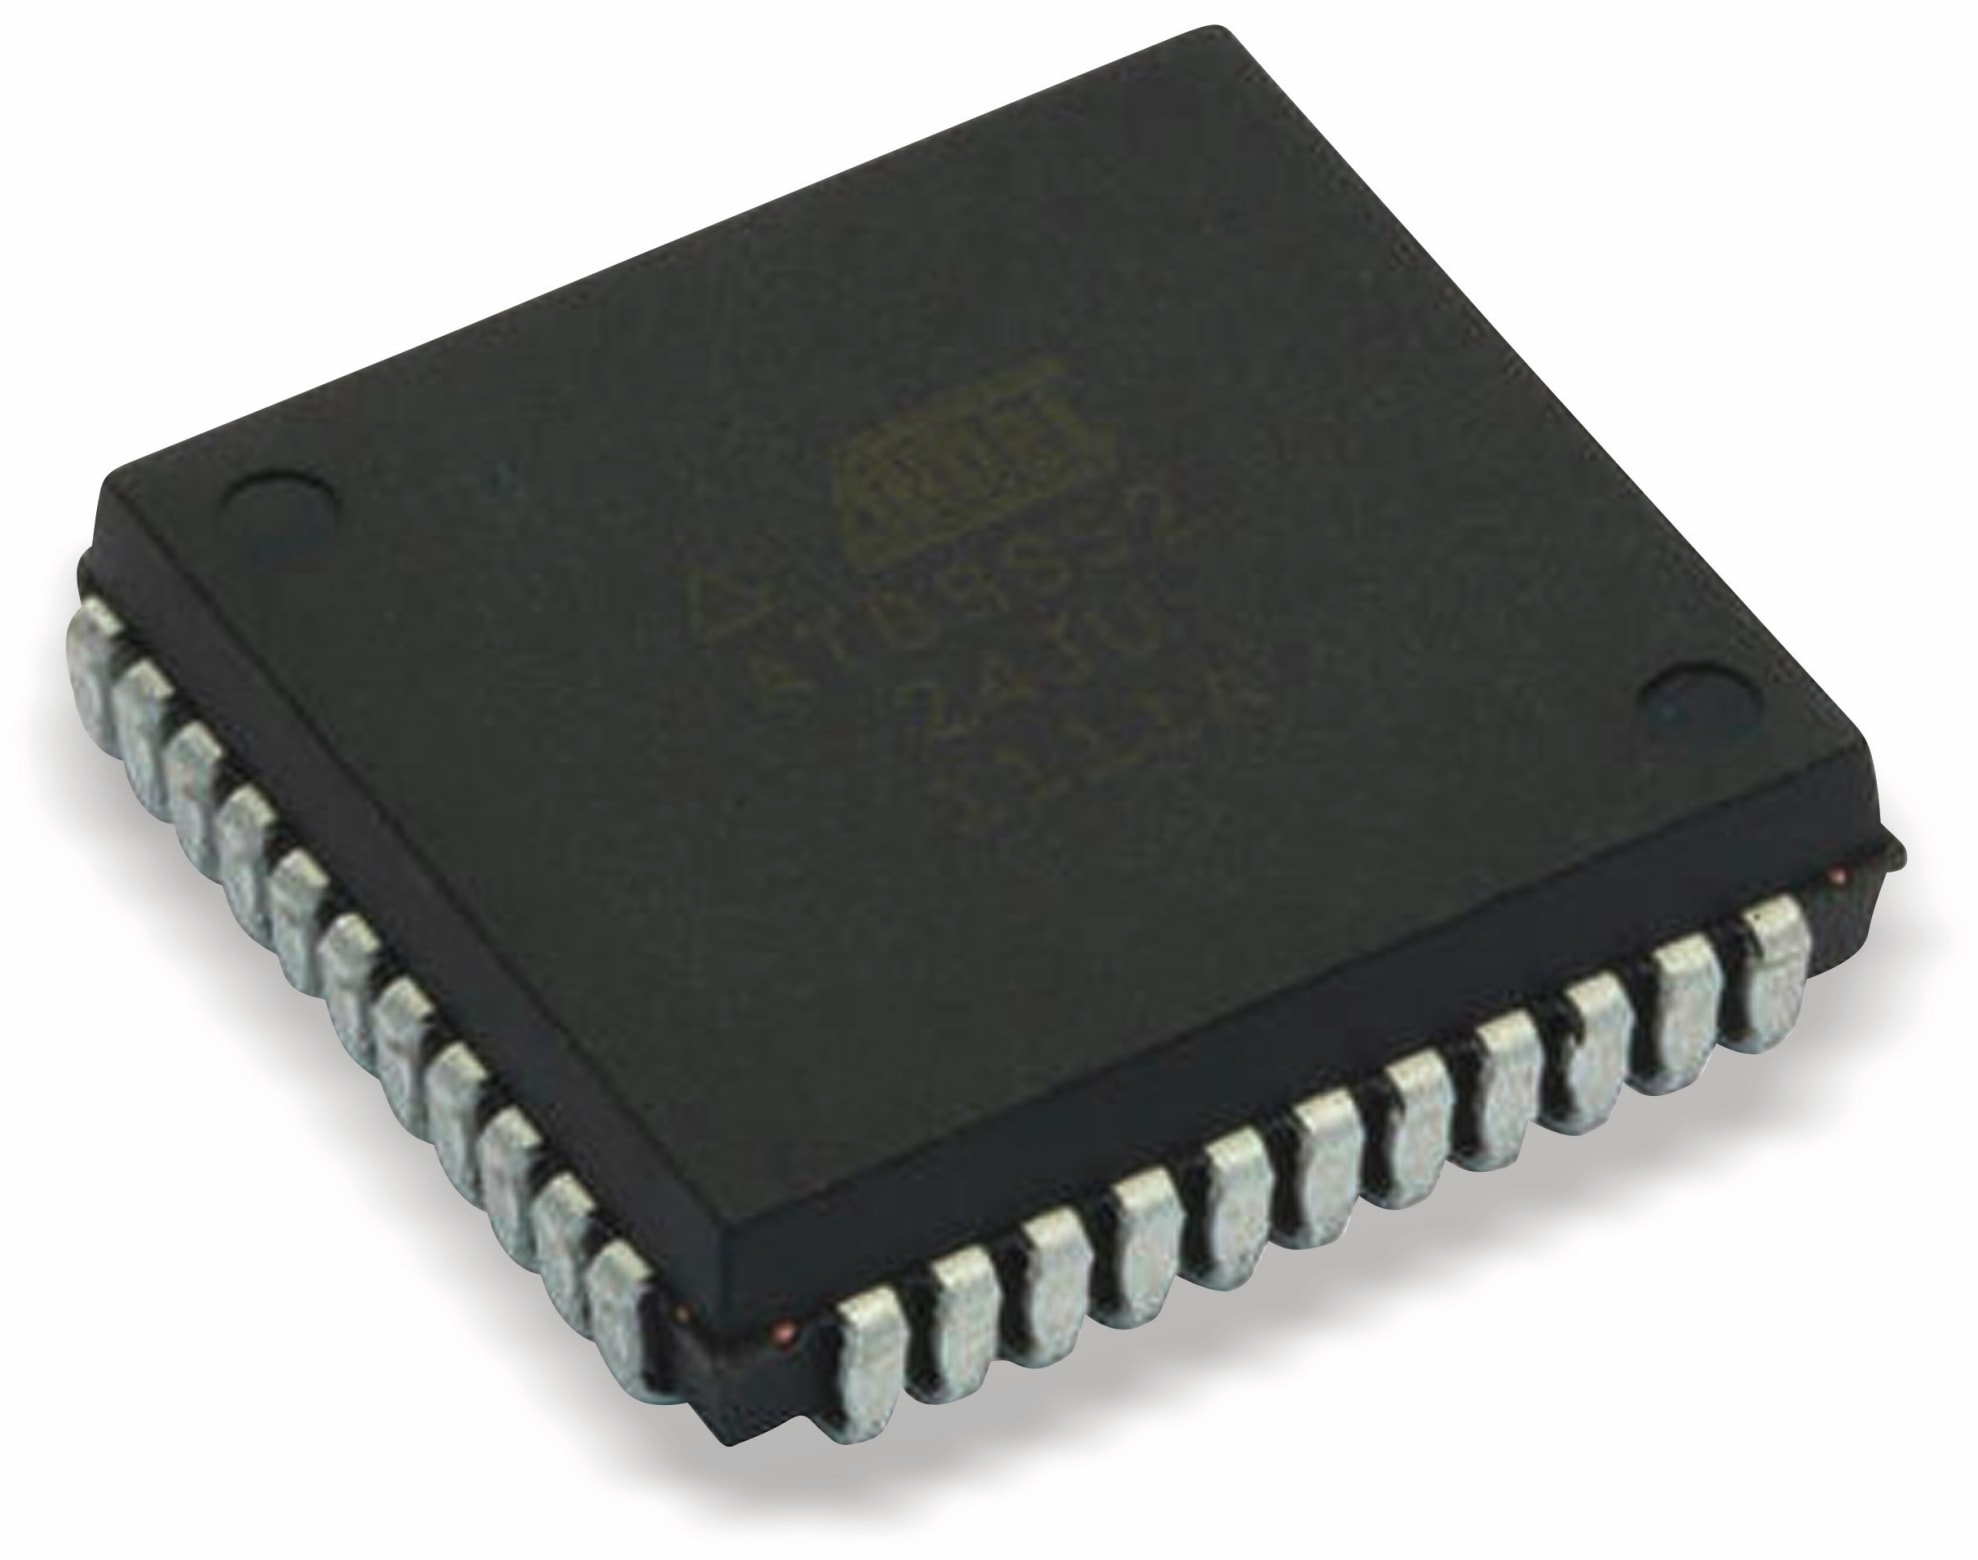 ATMEL Microcontroller AT89C51RB2-SLSUM